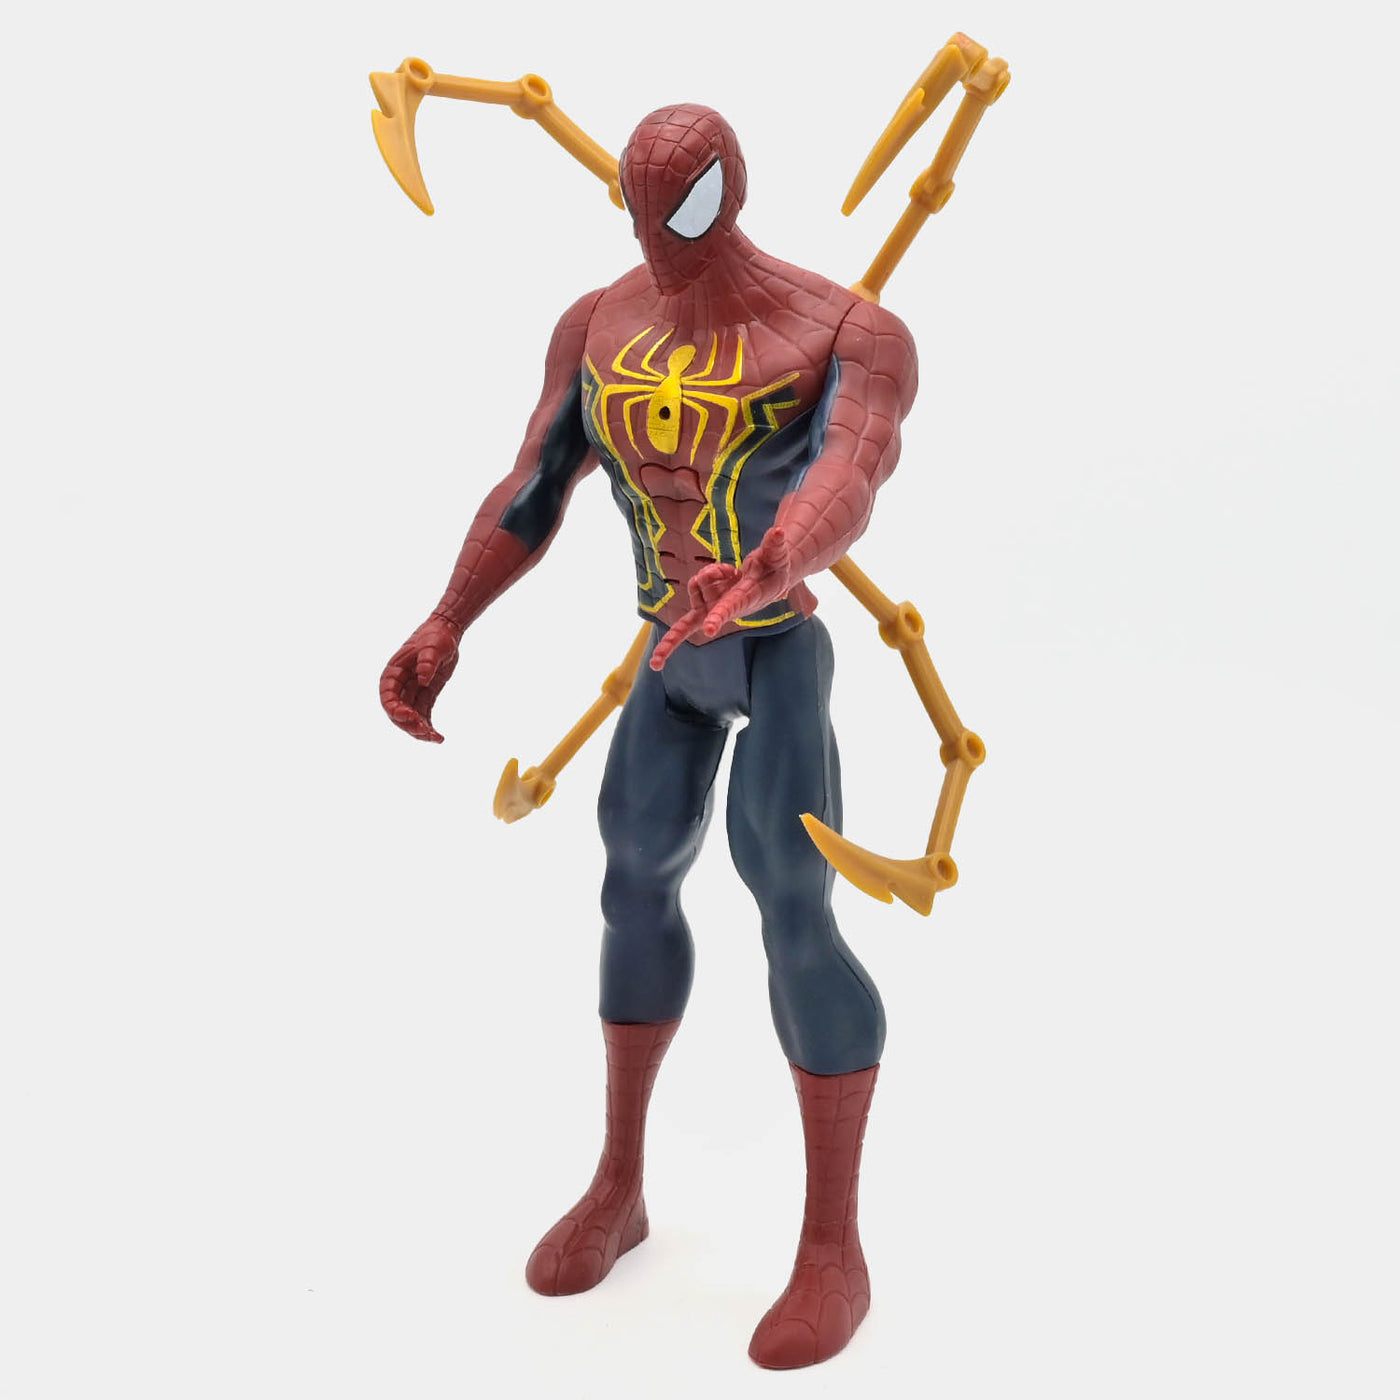 Super Action Hero Figure Toy